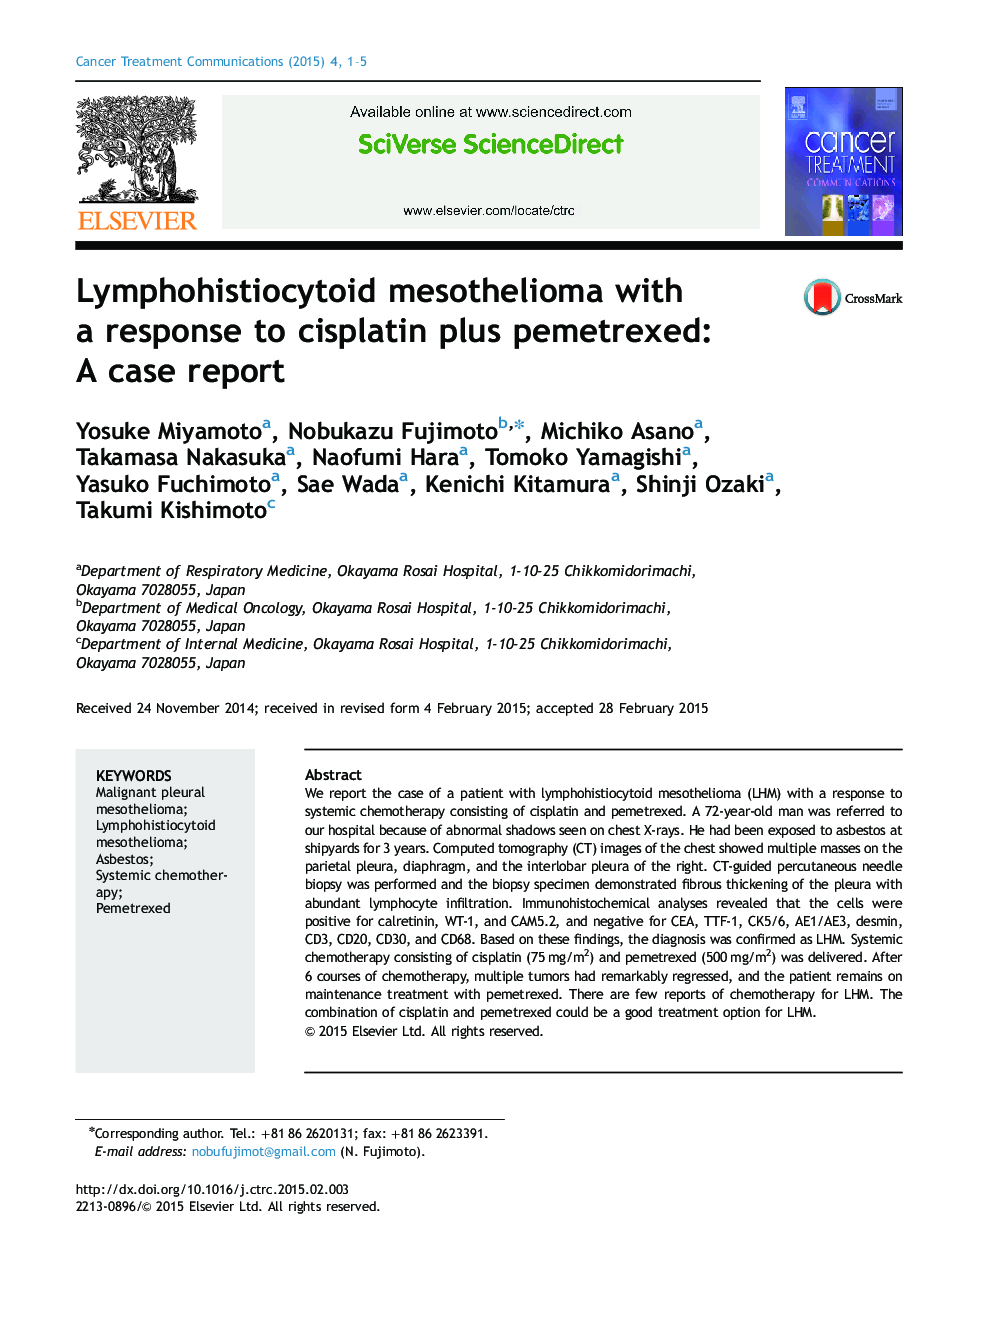 Lymphohistiocytoid mesothelioma with a response to cisplatin plus pemetrexed: A case report